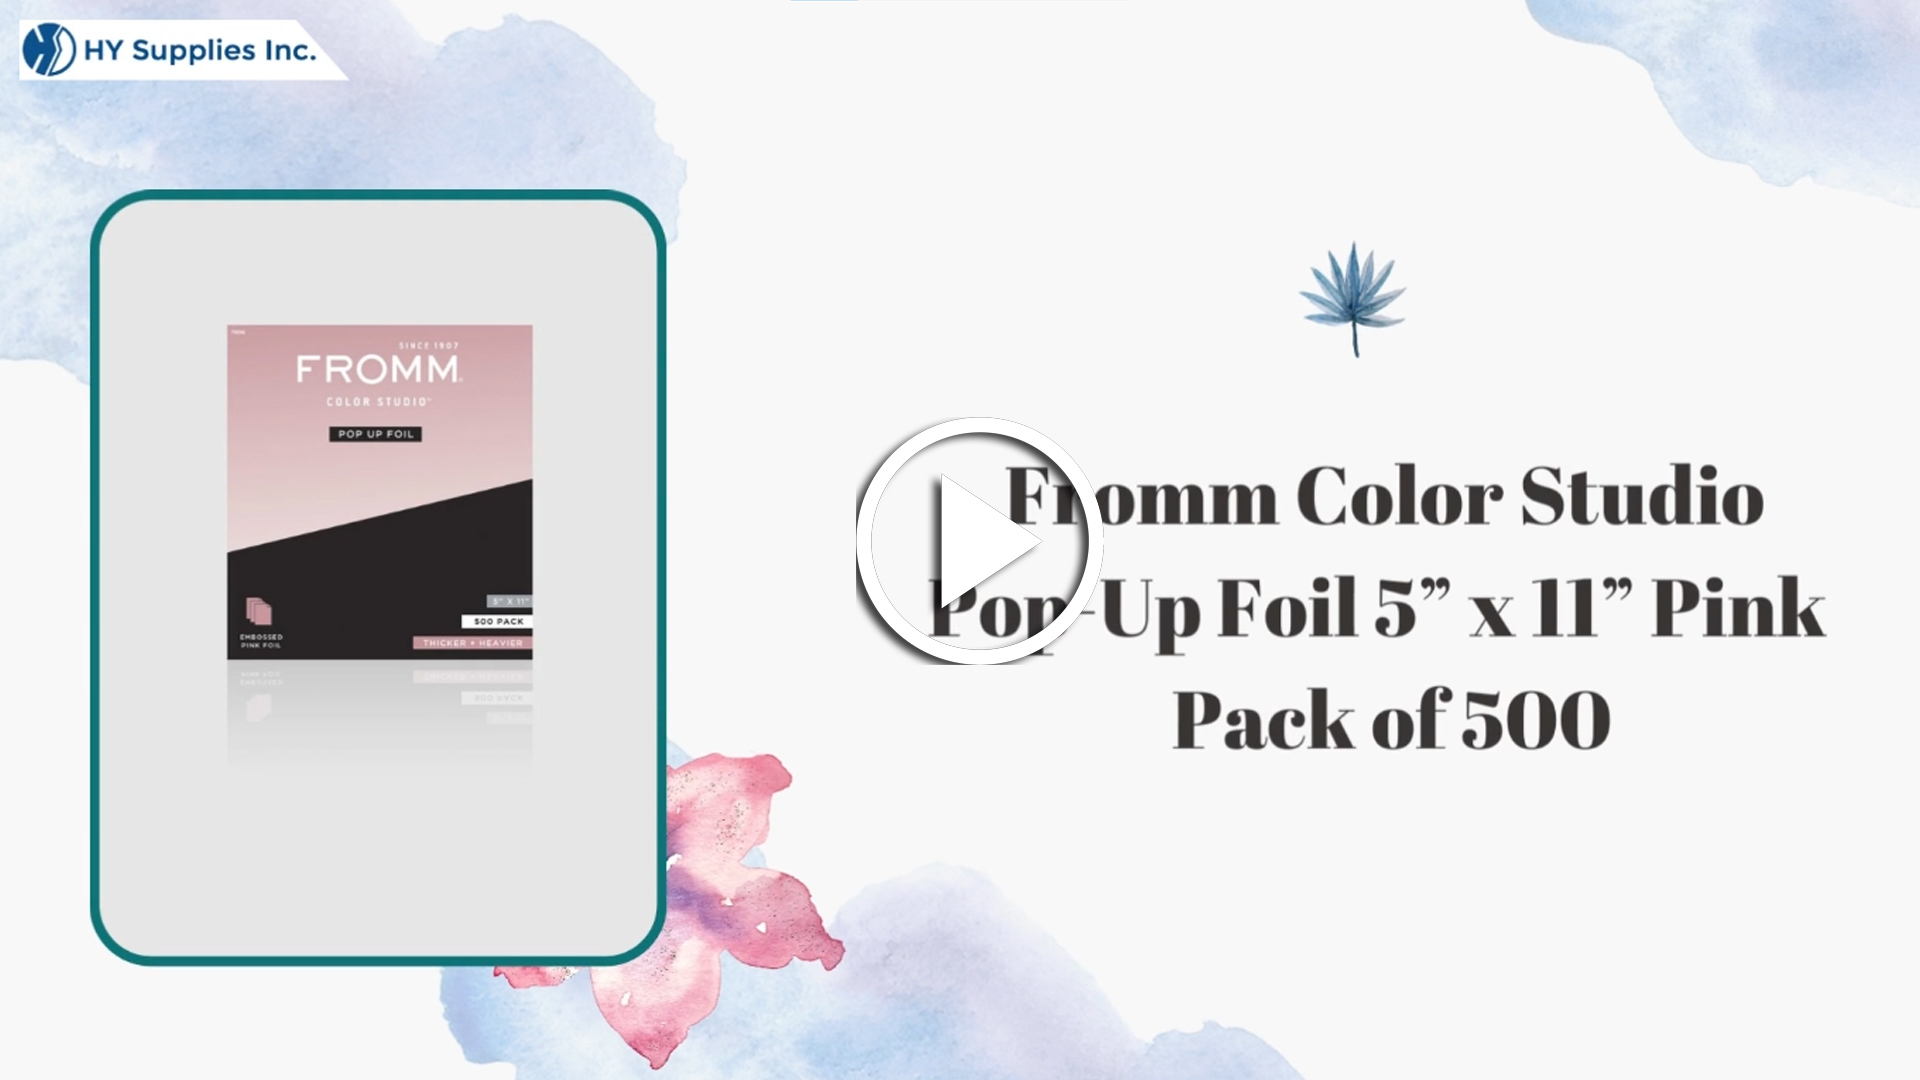 Fromm Color Studio Pop-Up Foil 5” x 11” Pink - Pack of 500